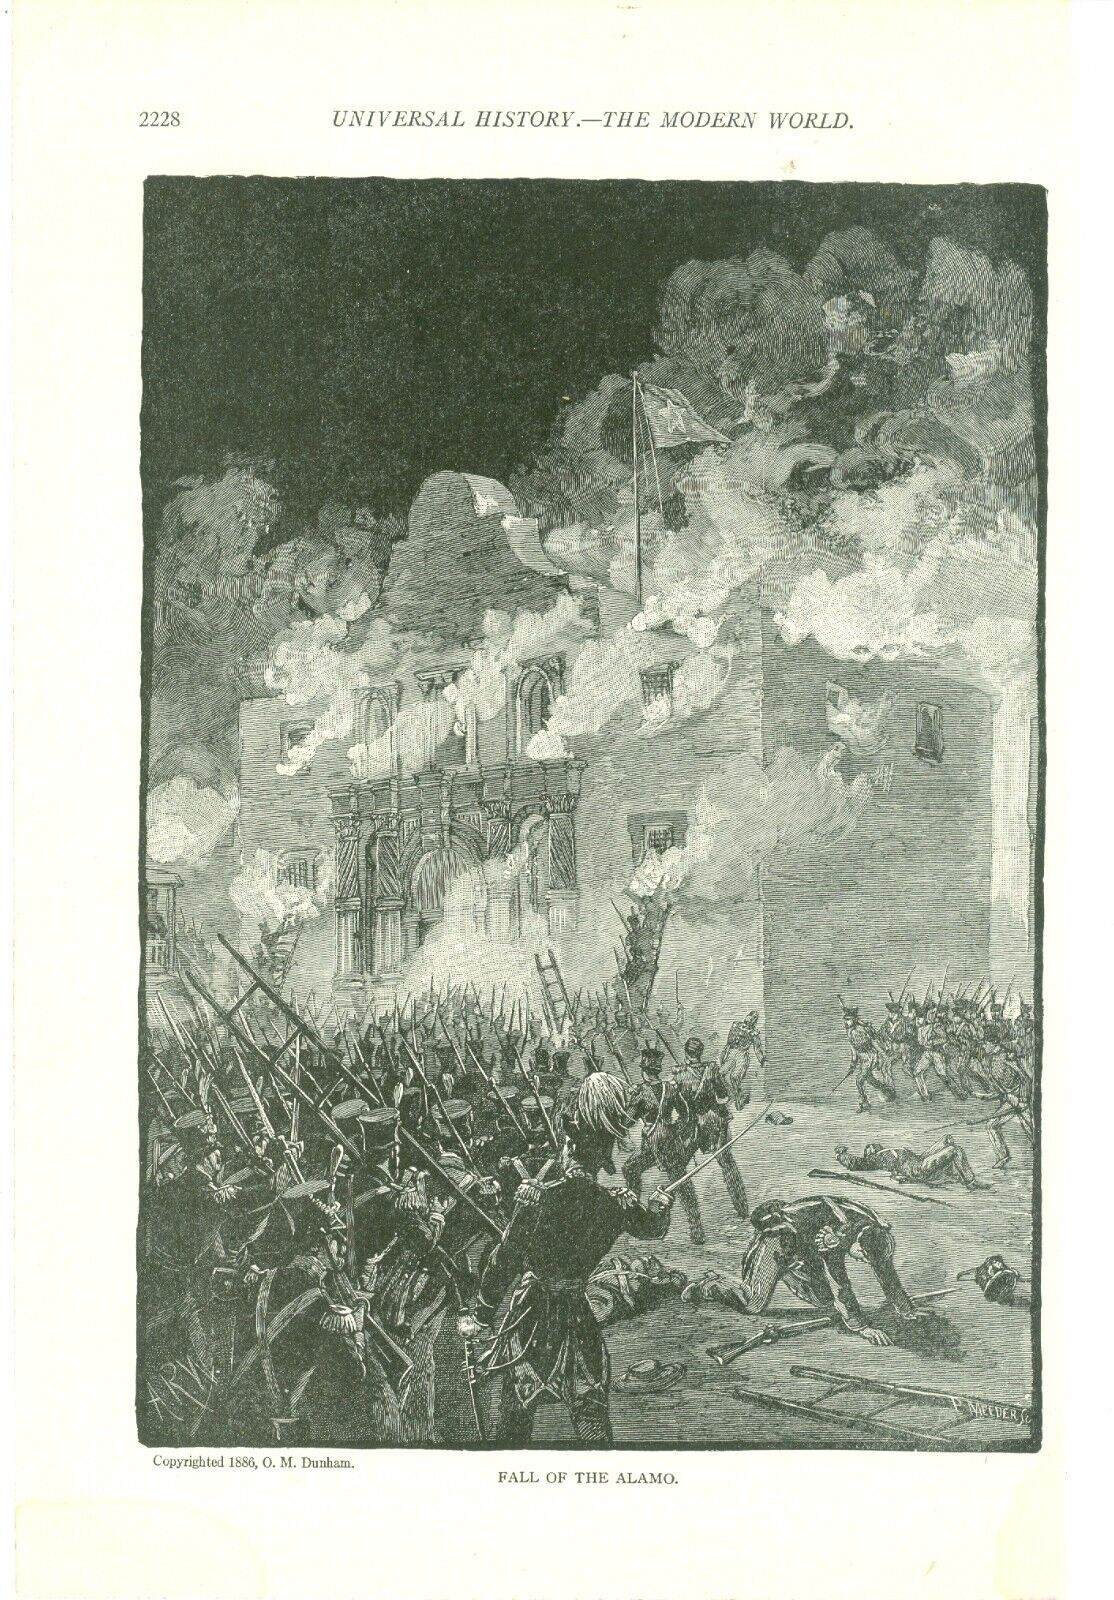 1905 Print American History United States Fall Of The Alamo O.M. Dunham